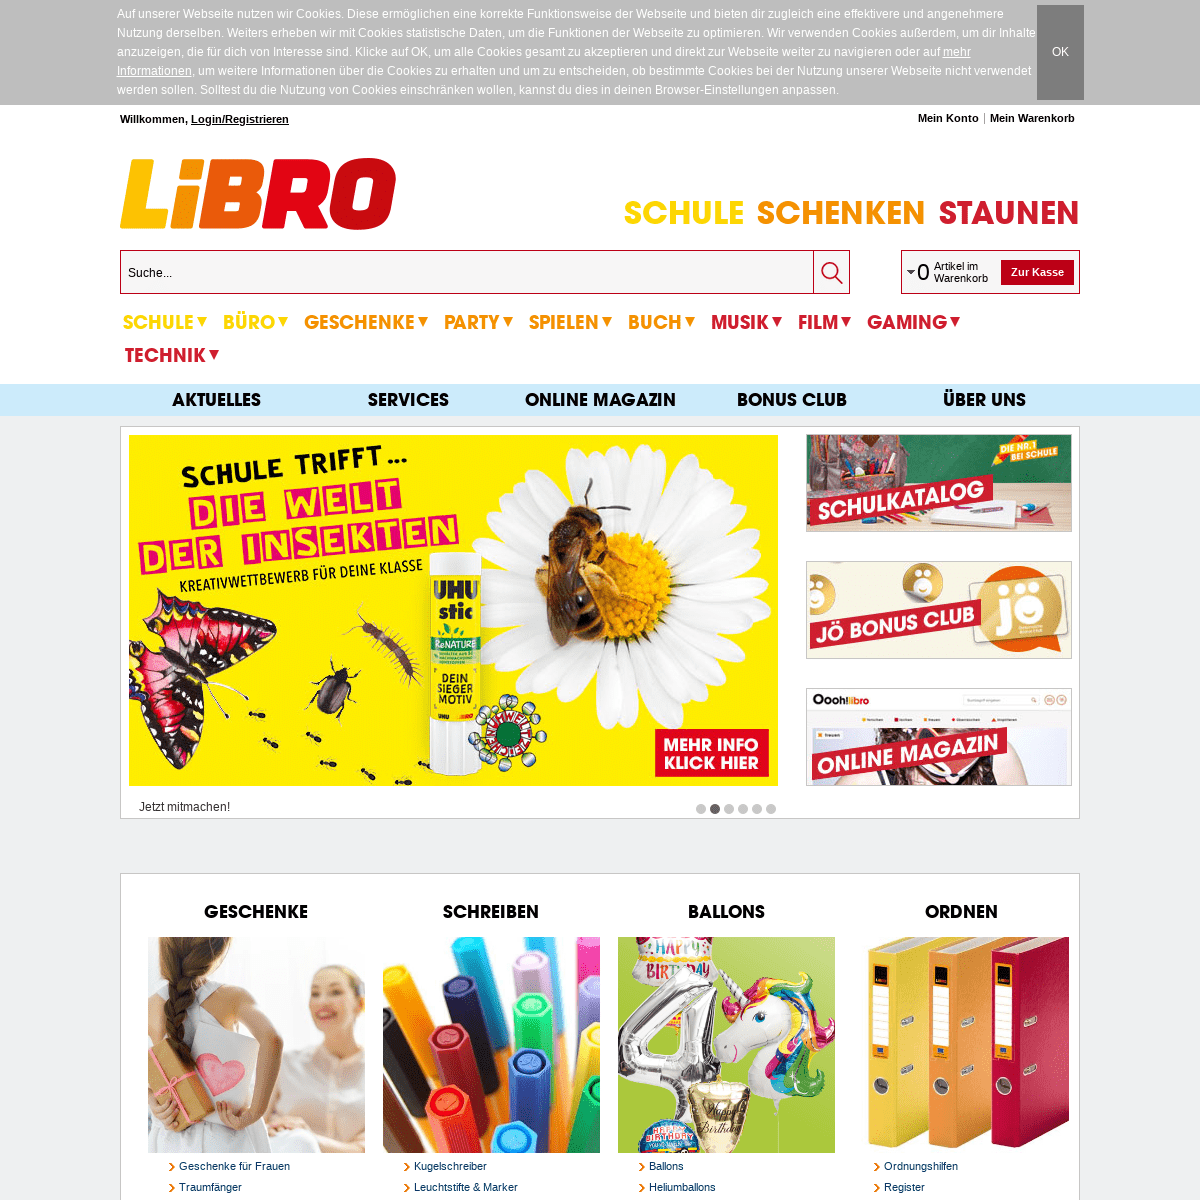 LIBRO - Schule Schenken Staunen | libro.at